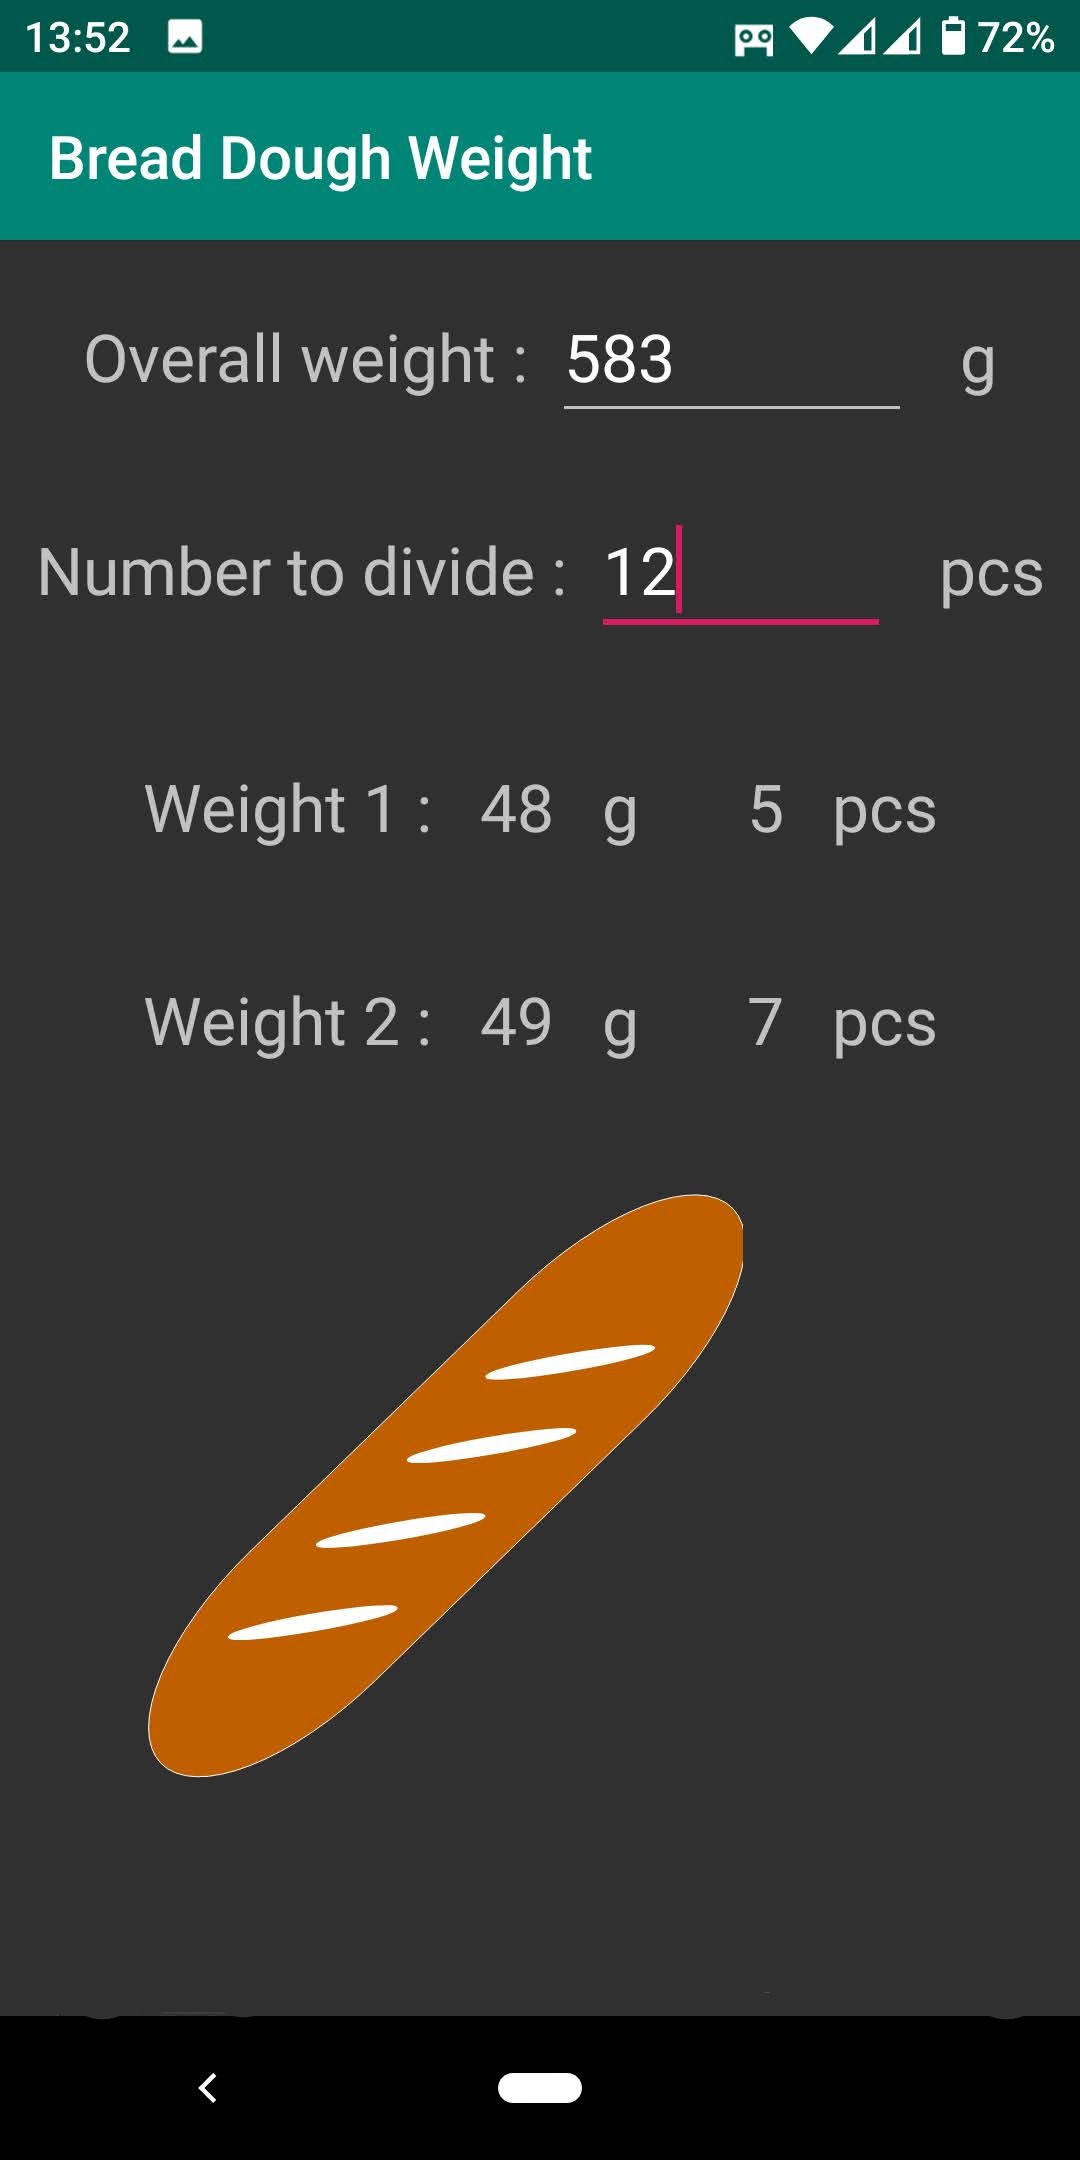 Bread dough weight calculation, description, vertical